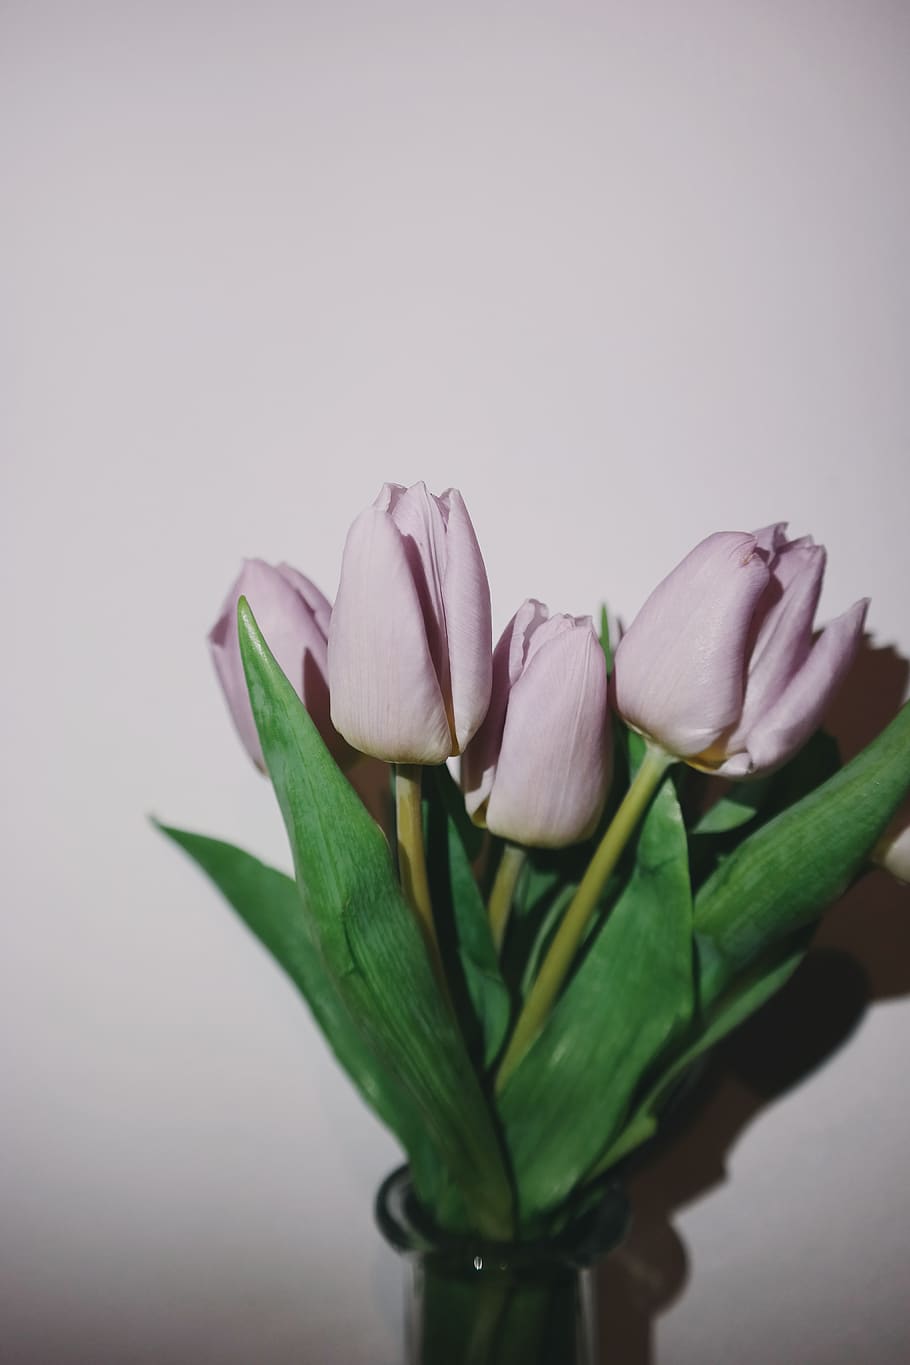 HD wallpaper: vase of flowers, wallpaper, nature, purple tulips, purple flowers